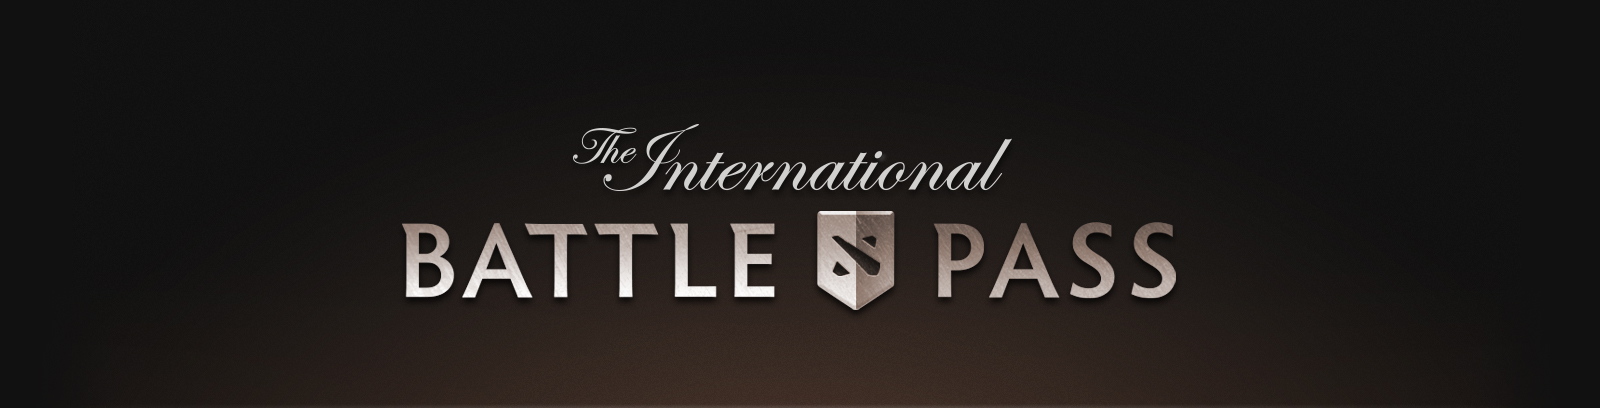 The International 2016 Battle Pass (The International Compendium)